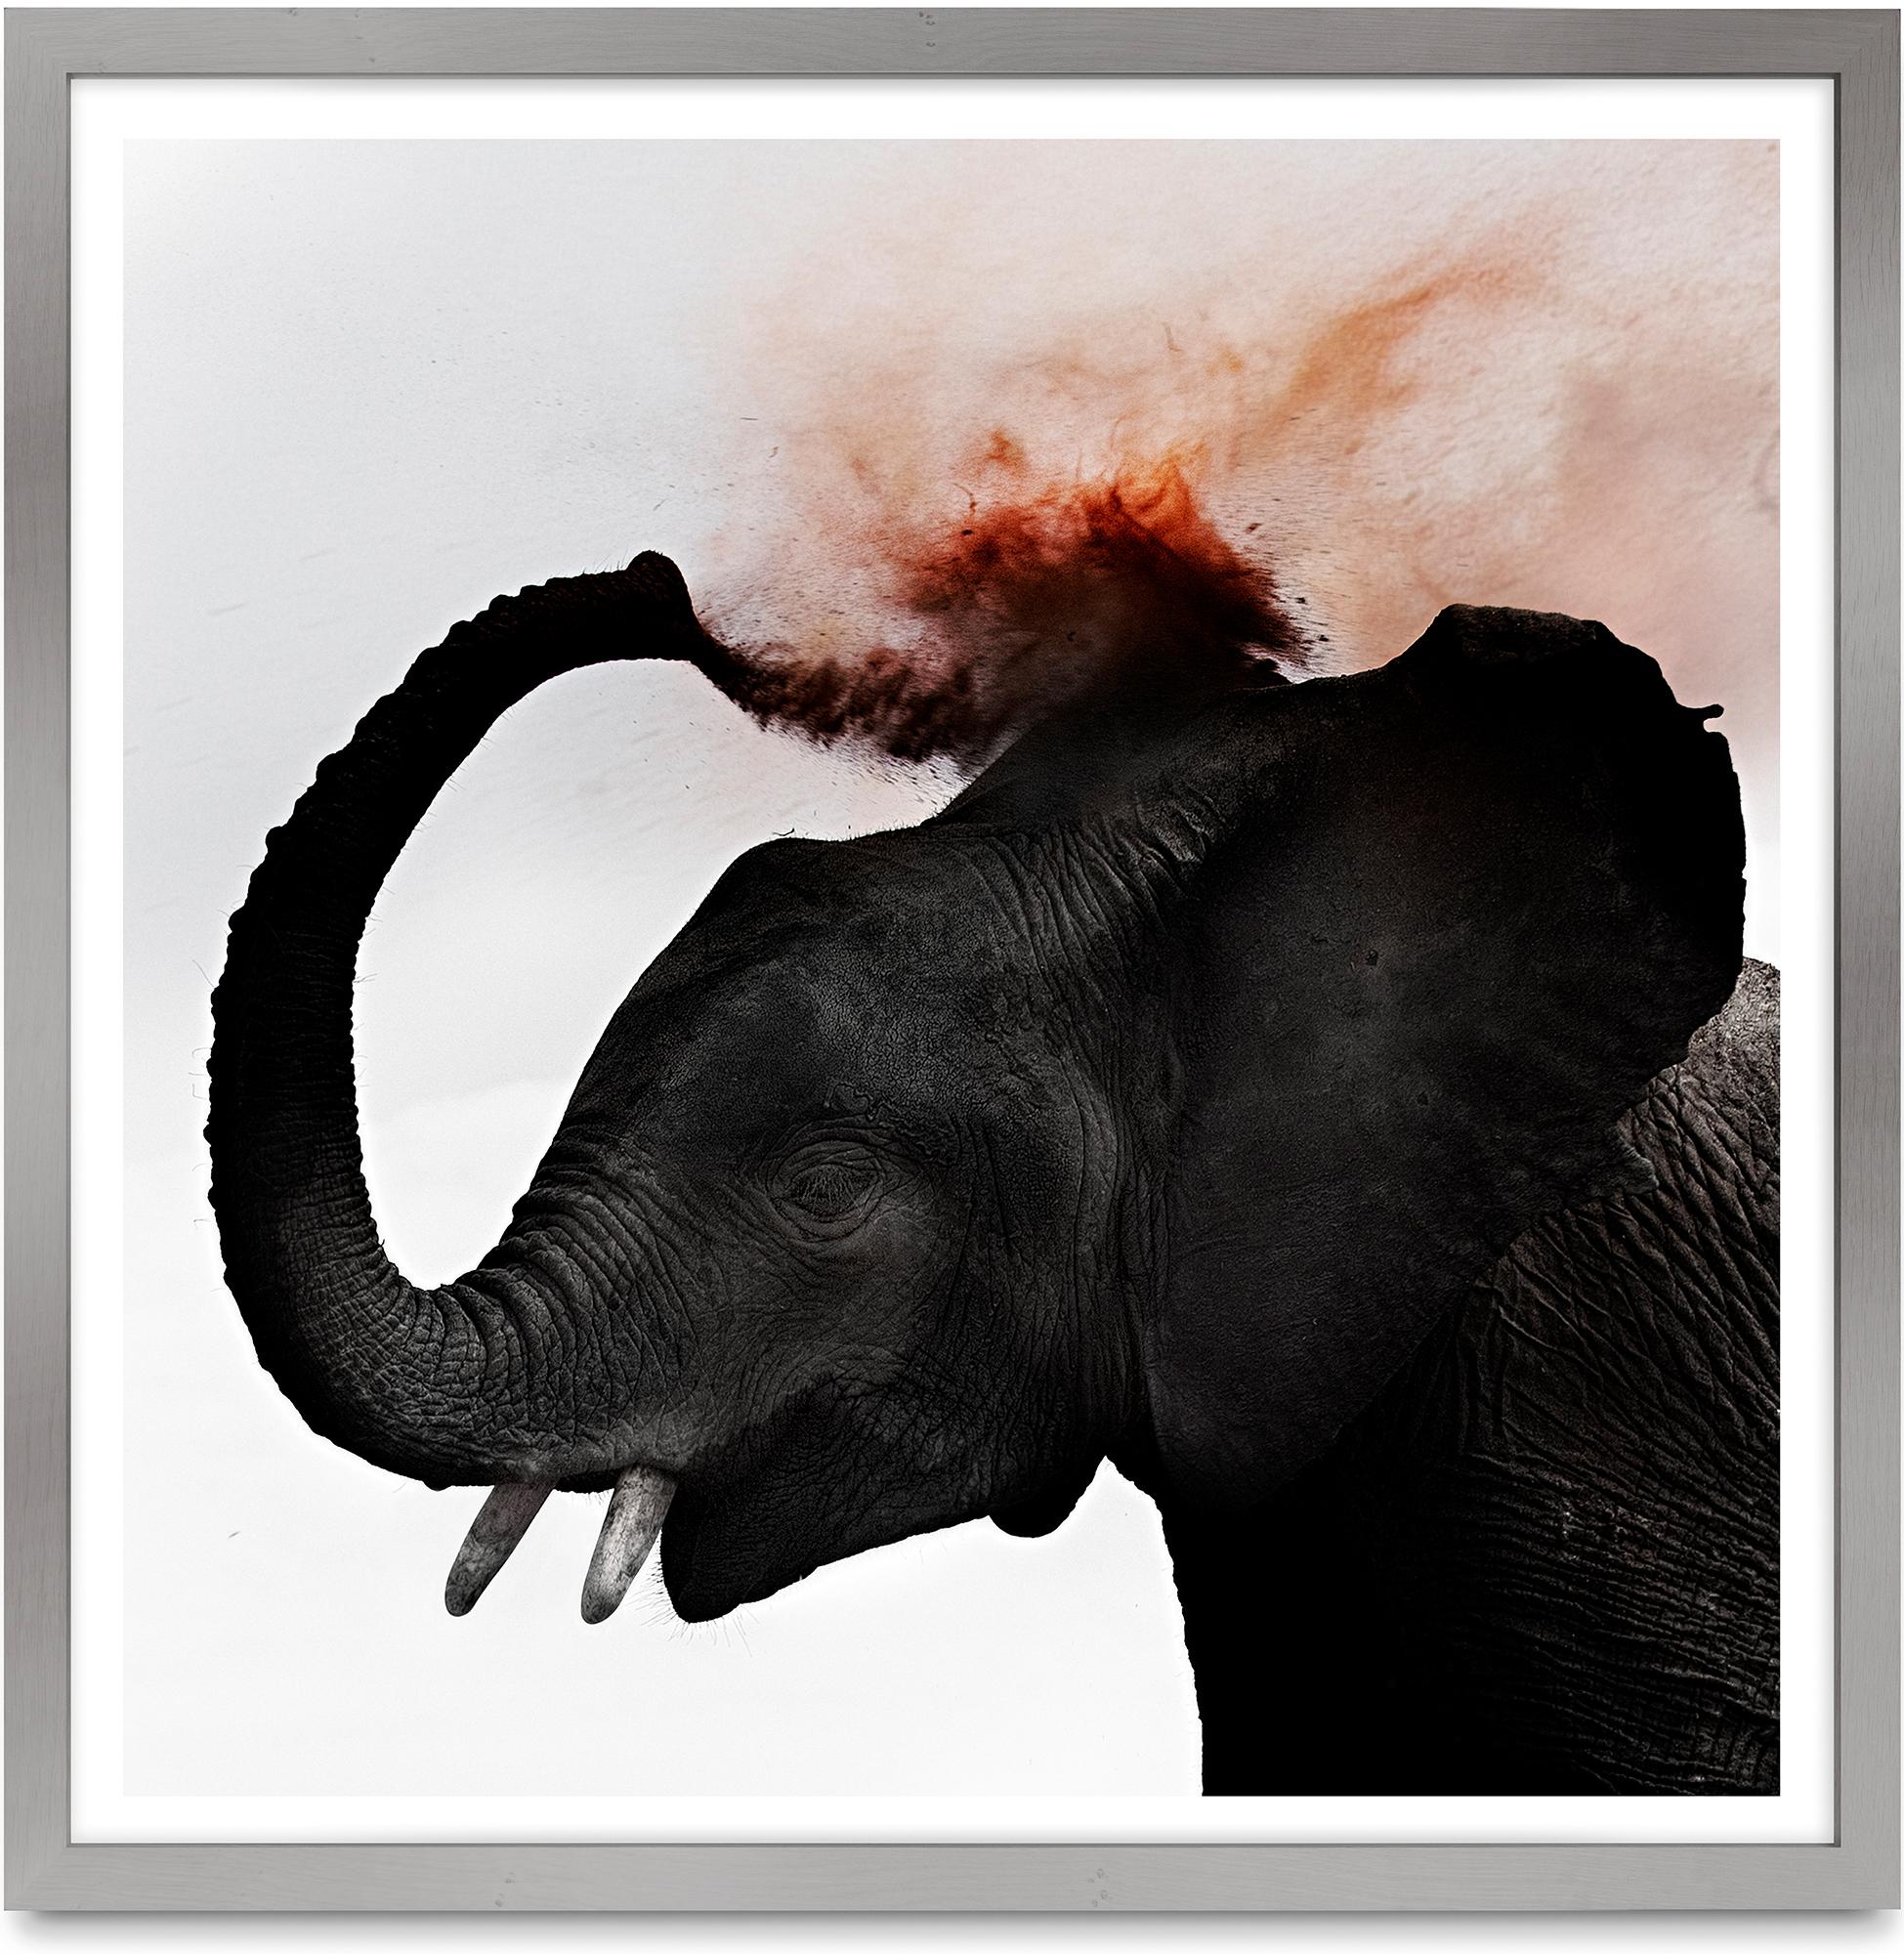 Joachim Schmeisser Color Photograph – Dust III, Kenia, Elefant, Tier, Tierwelt, Farbfotografie